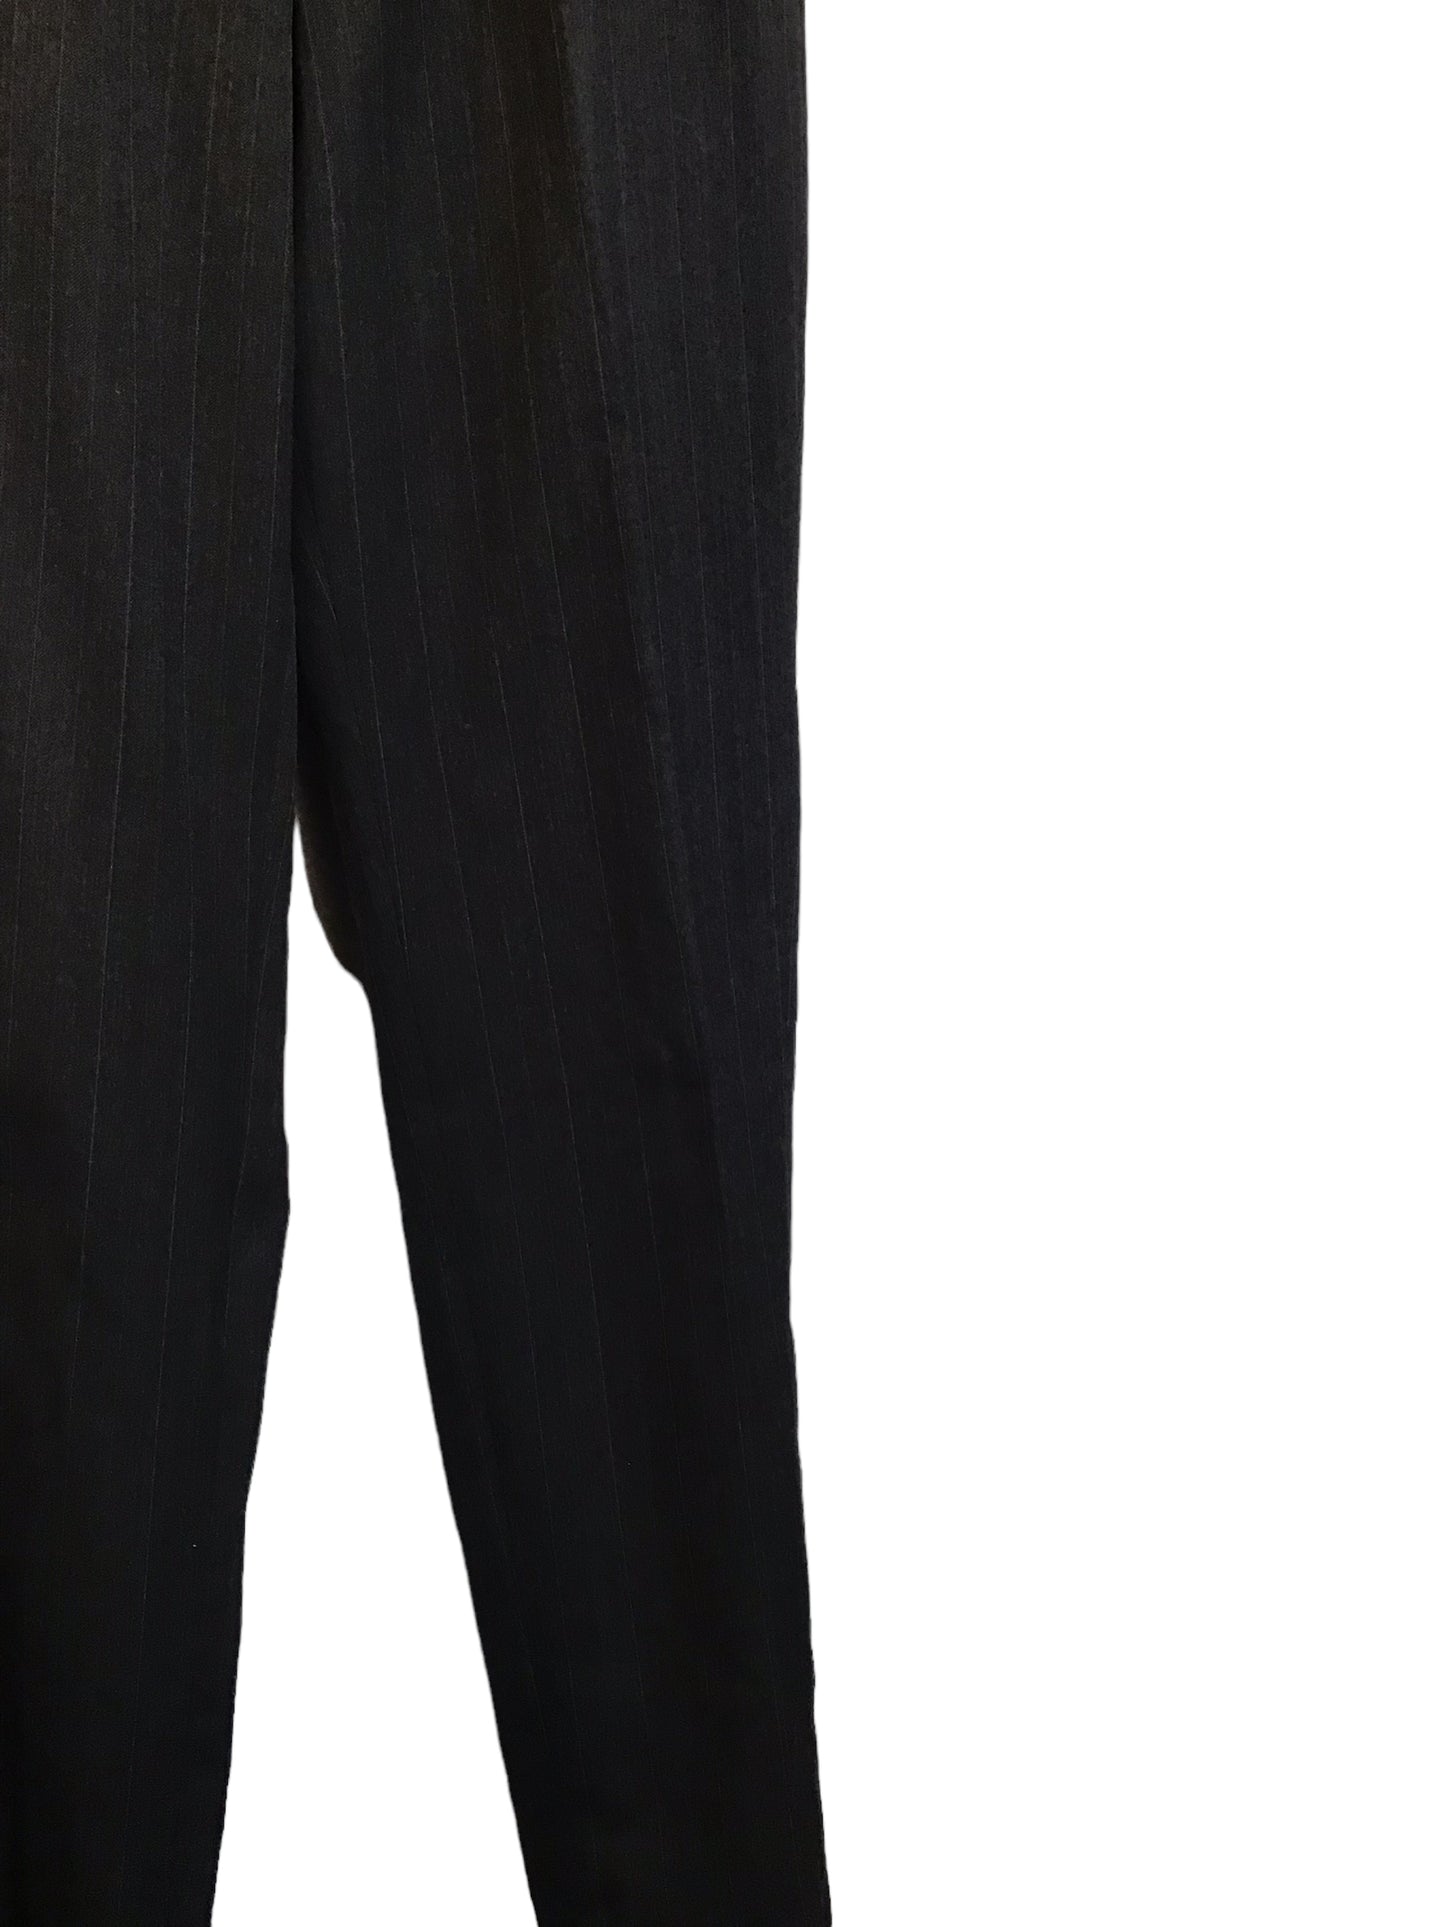 Scott Pinstriped Trousers (Size XL)